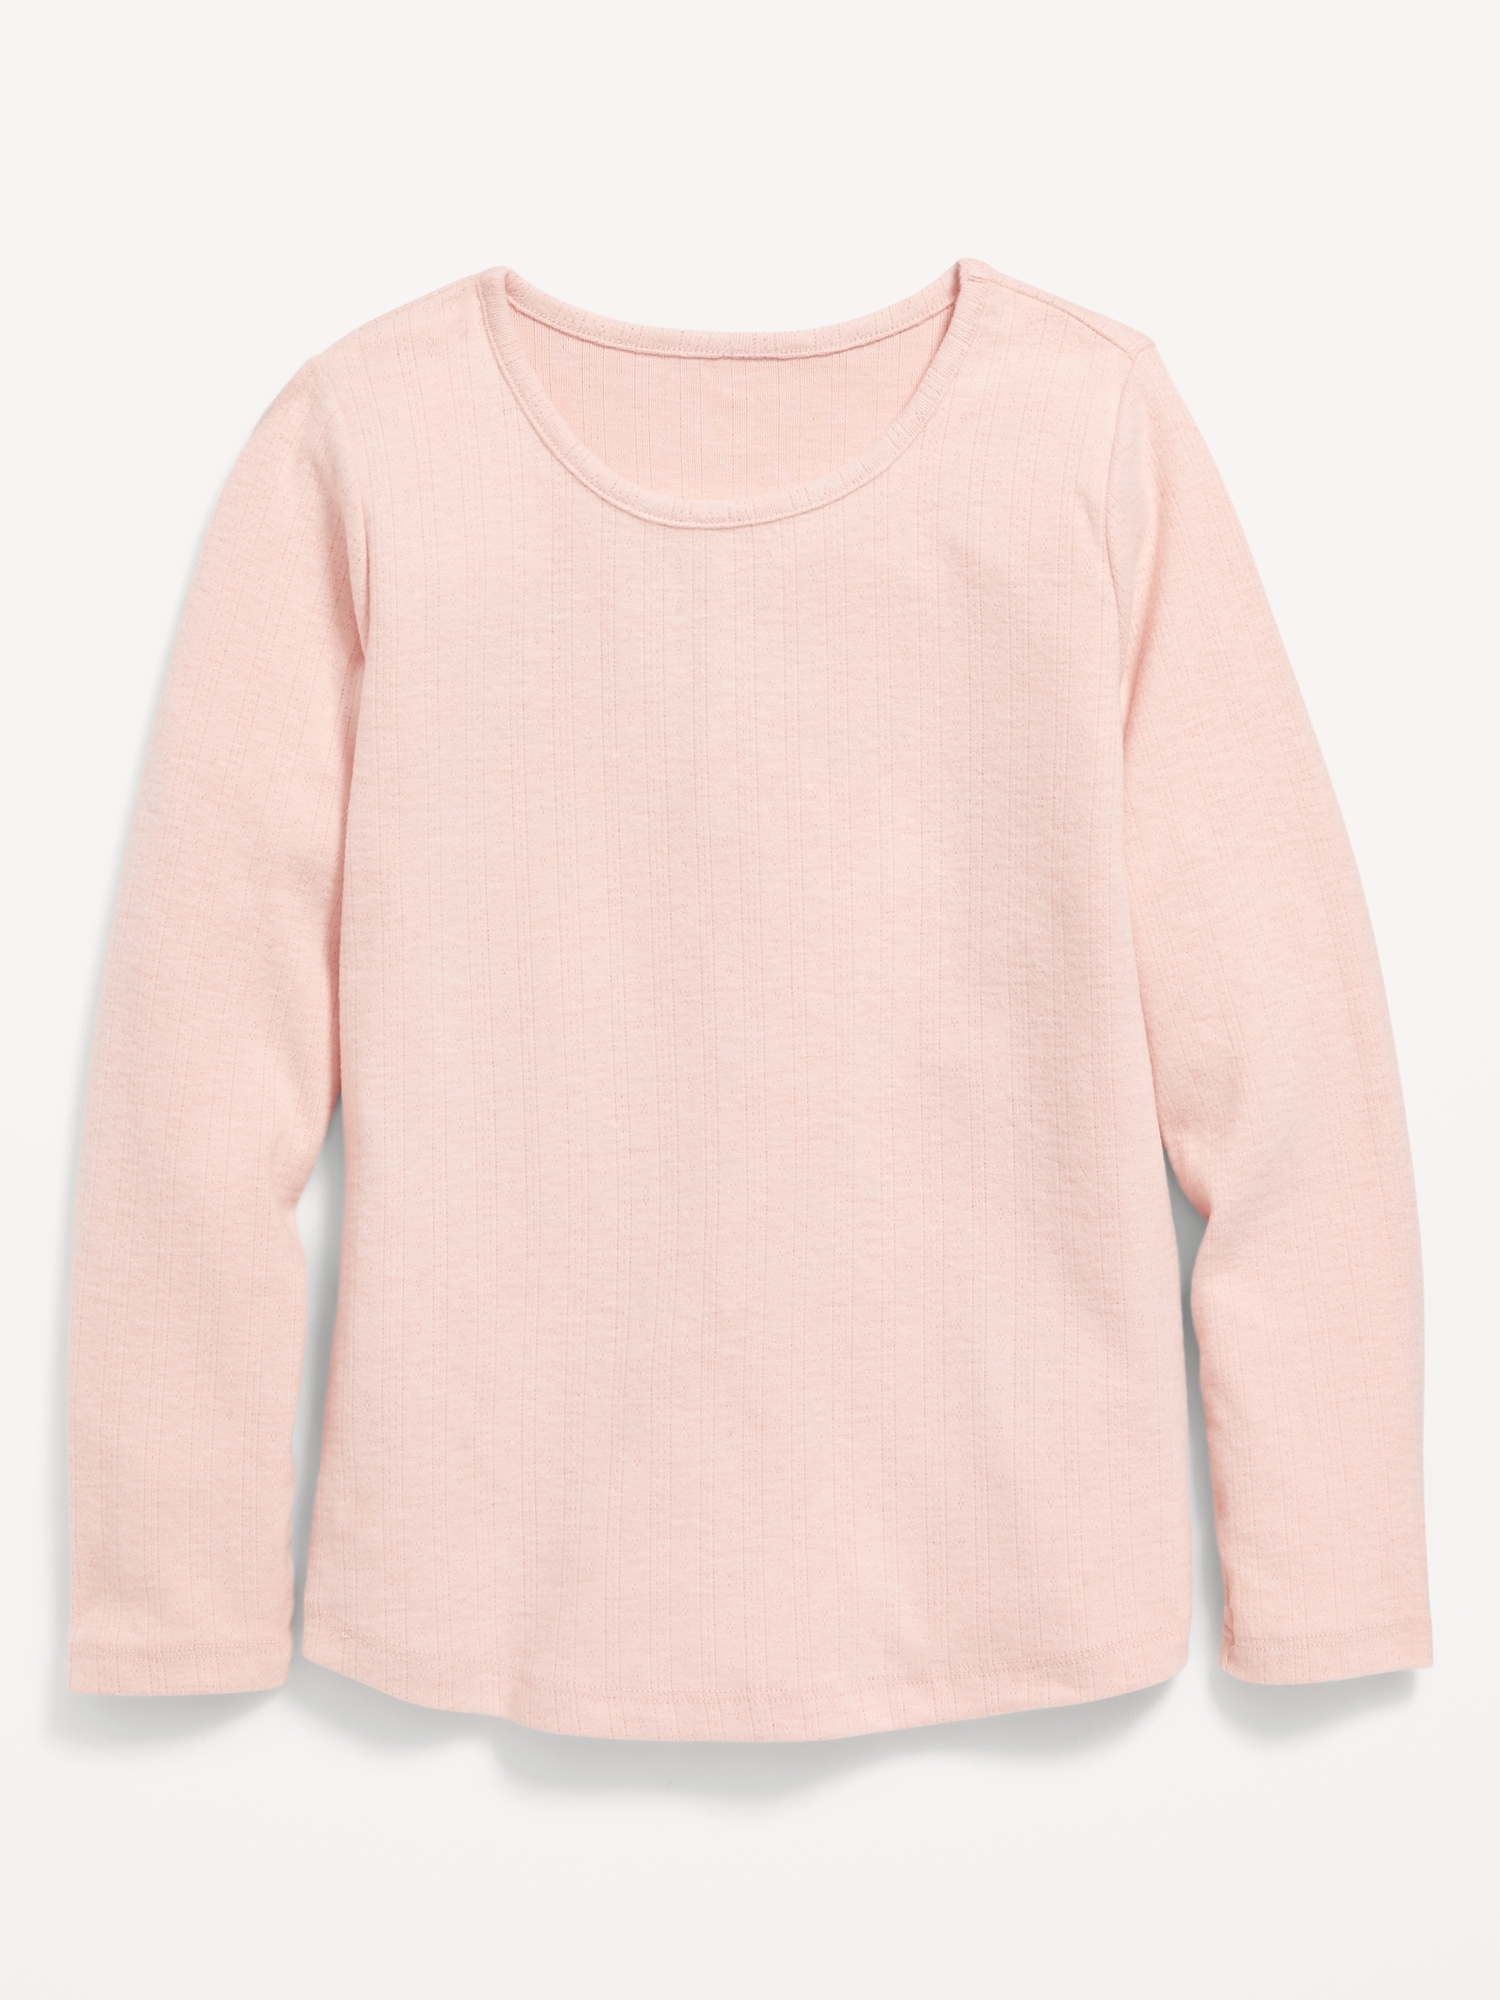 Cozy Long-Sleeve T-Shirt for Girls